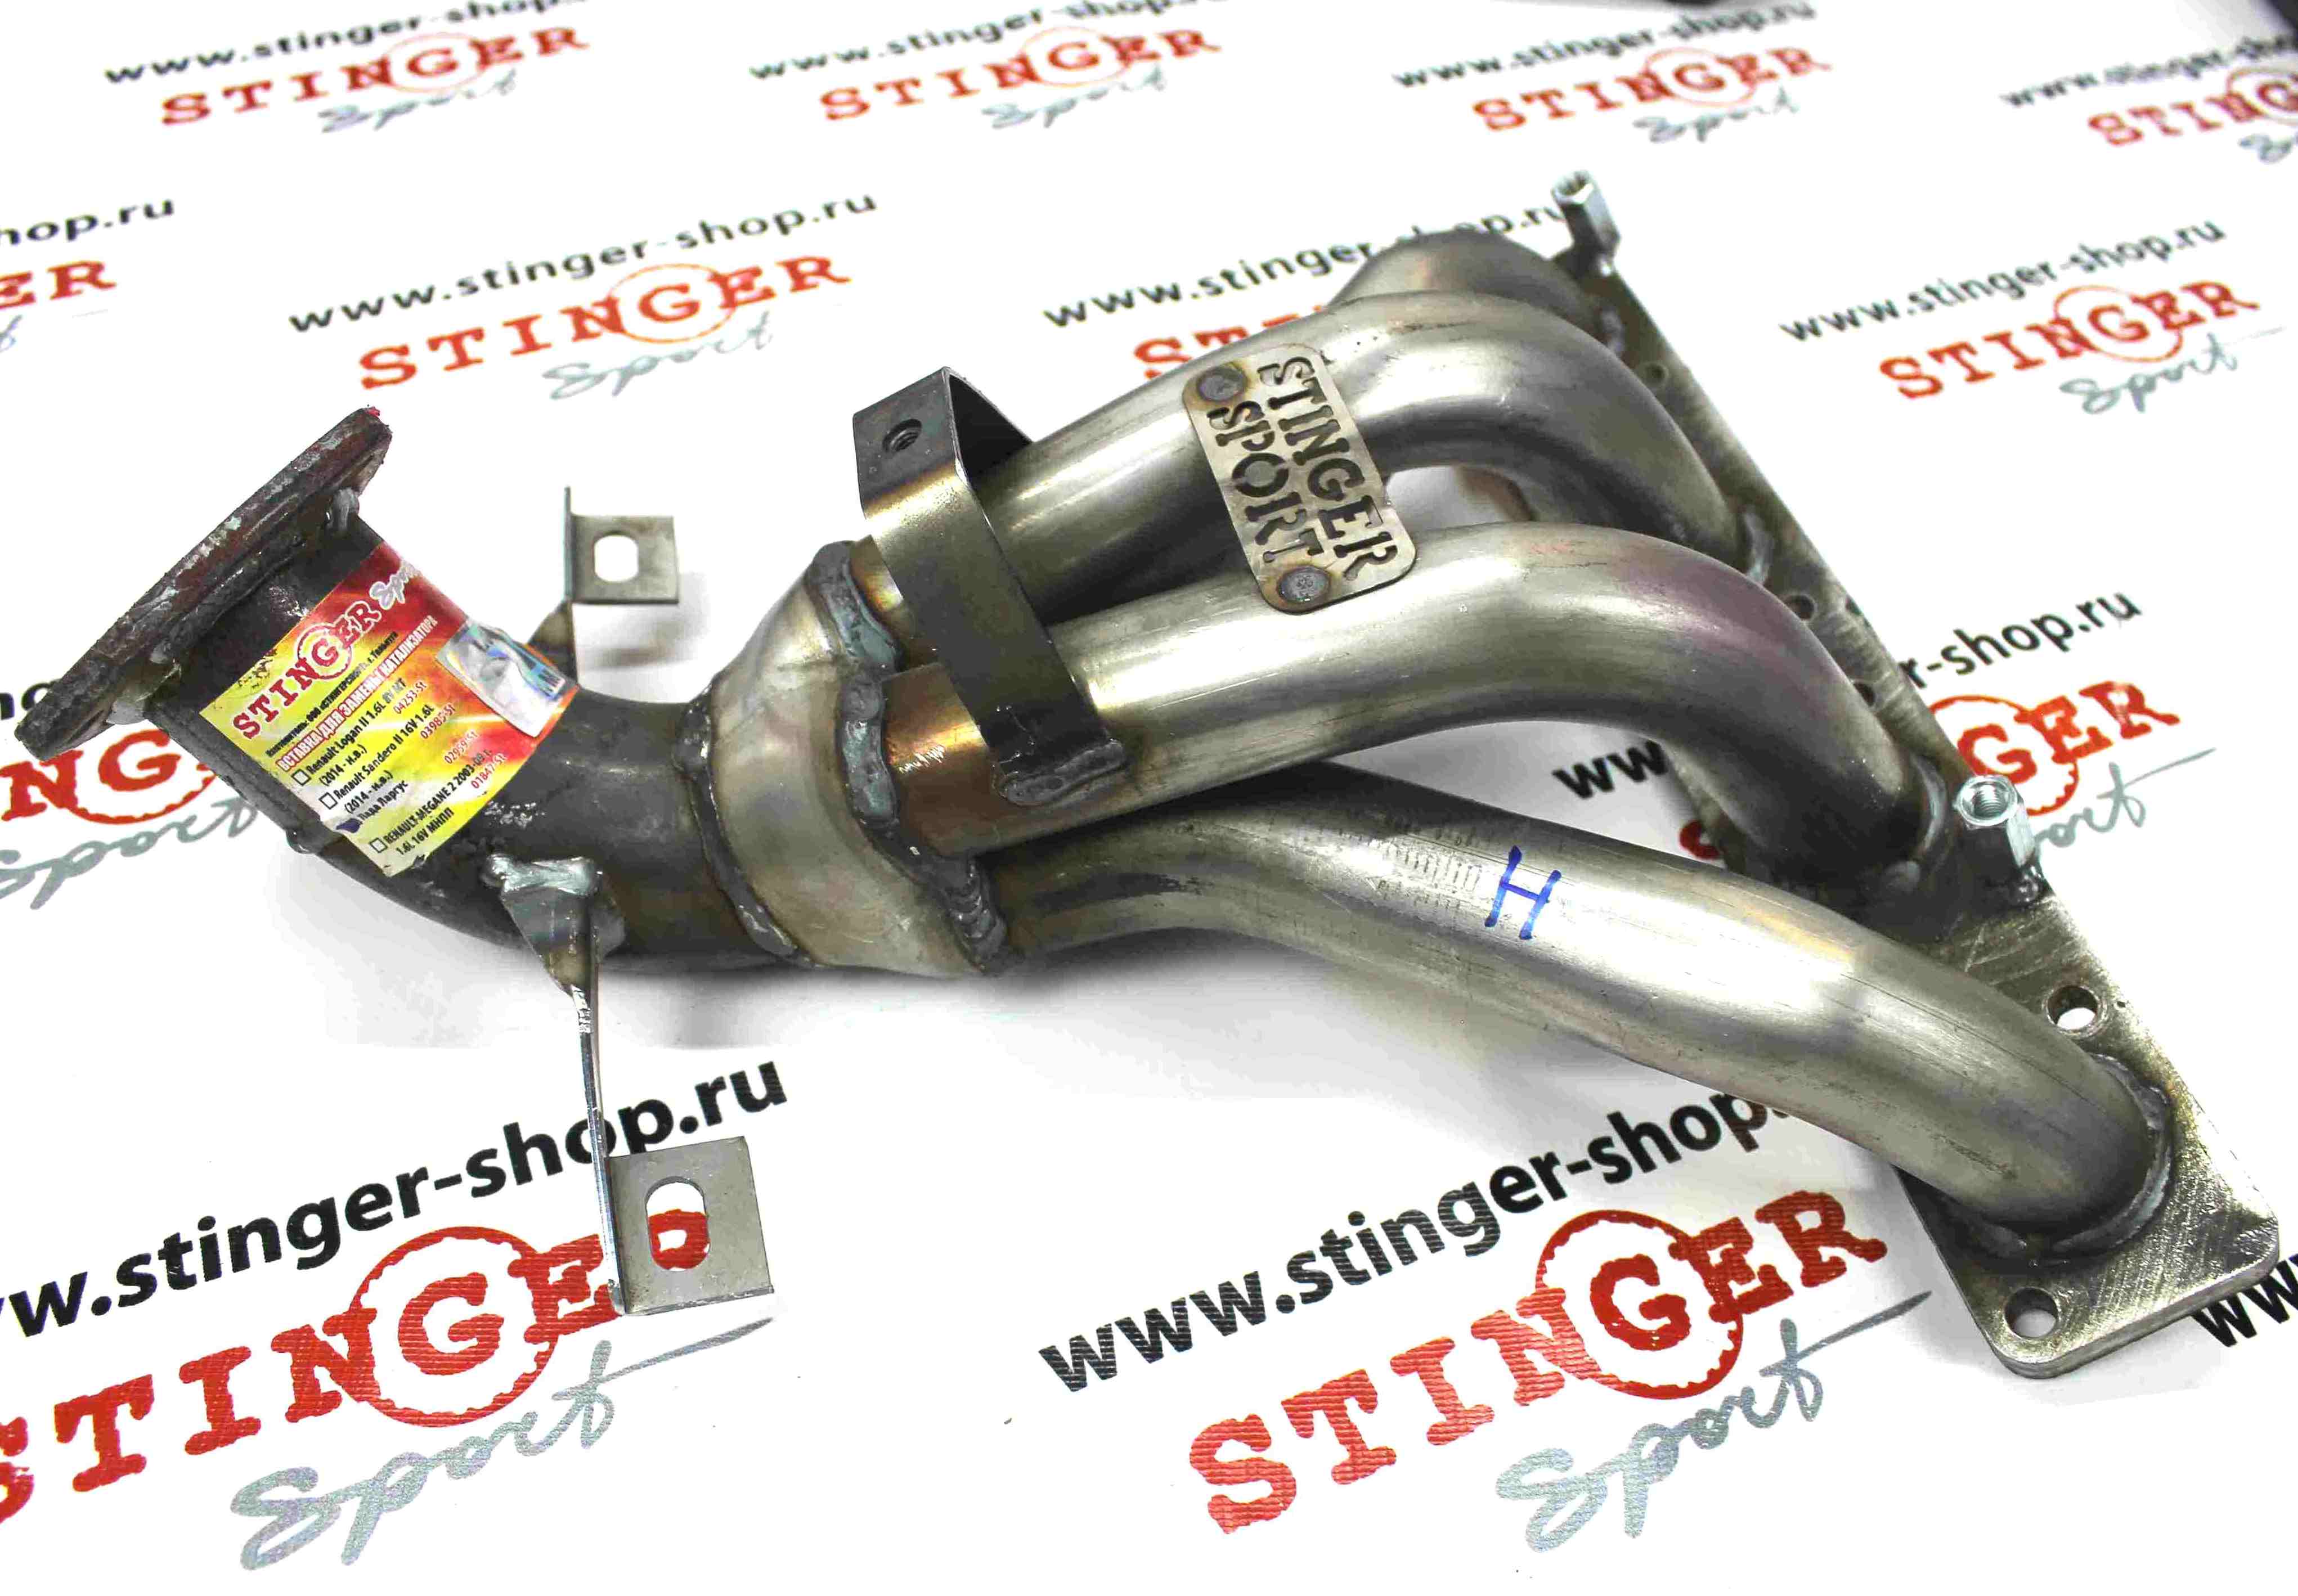 Вставка для замены катализатора "Stinger Sport" 4-1 16V для а/м ВАЗ Ларгус 1.6L (KS045L) (1 ДК) нержавеющая сталь. Фото �3